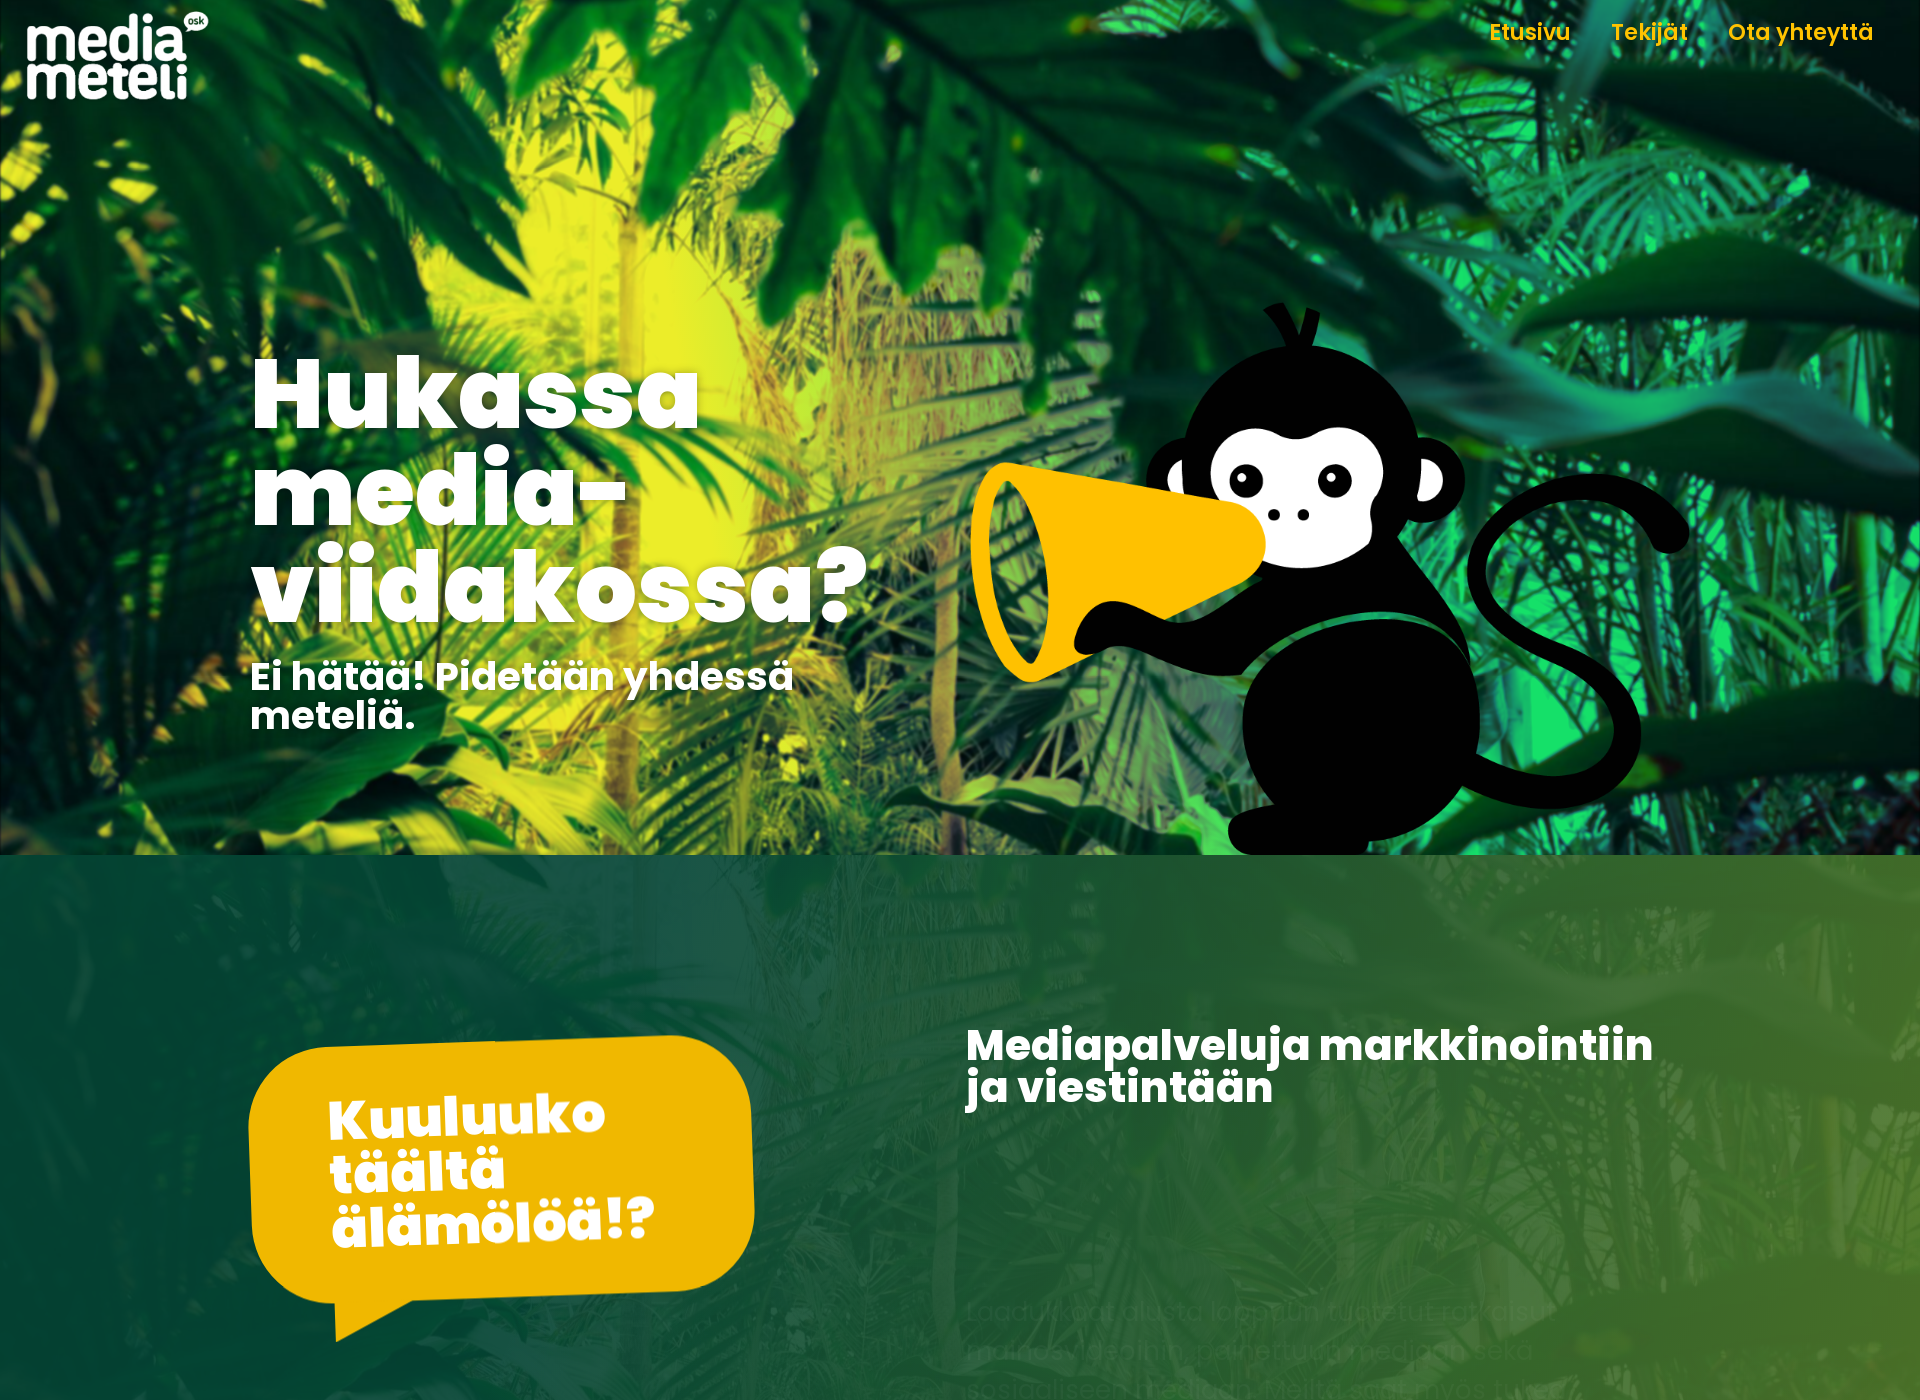 Screenshot for mediameteli.fi